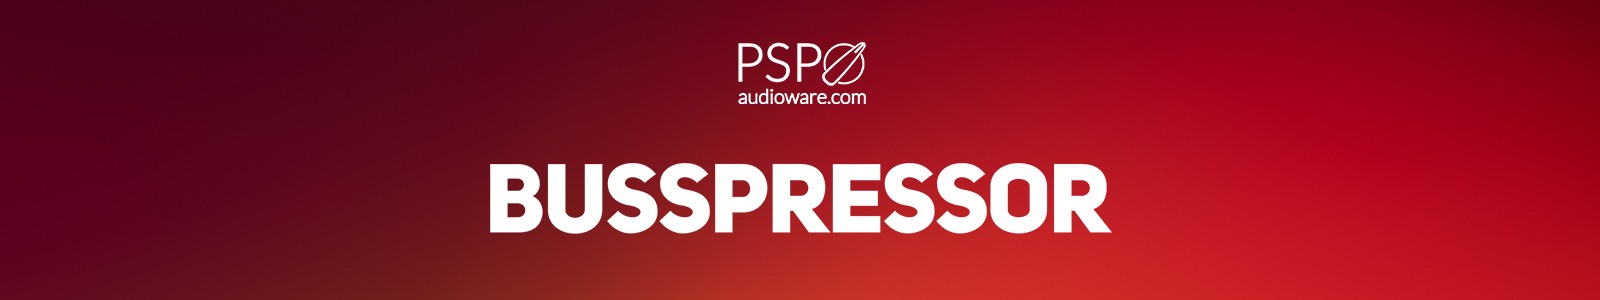 PSP BussProcessor by PSPAudioware